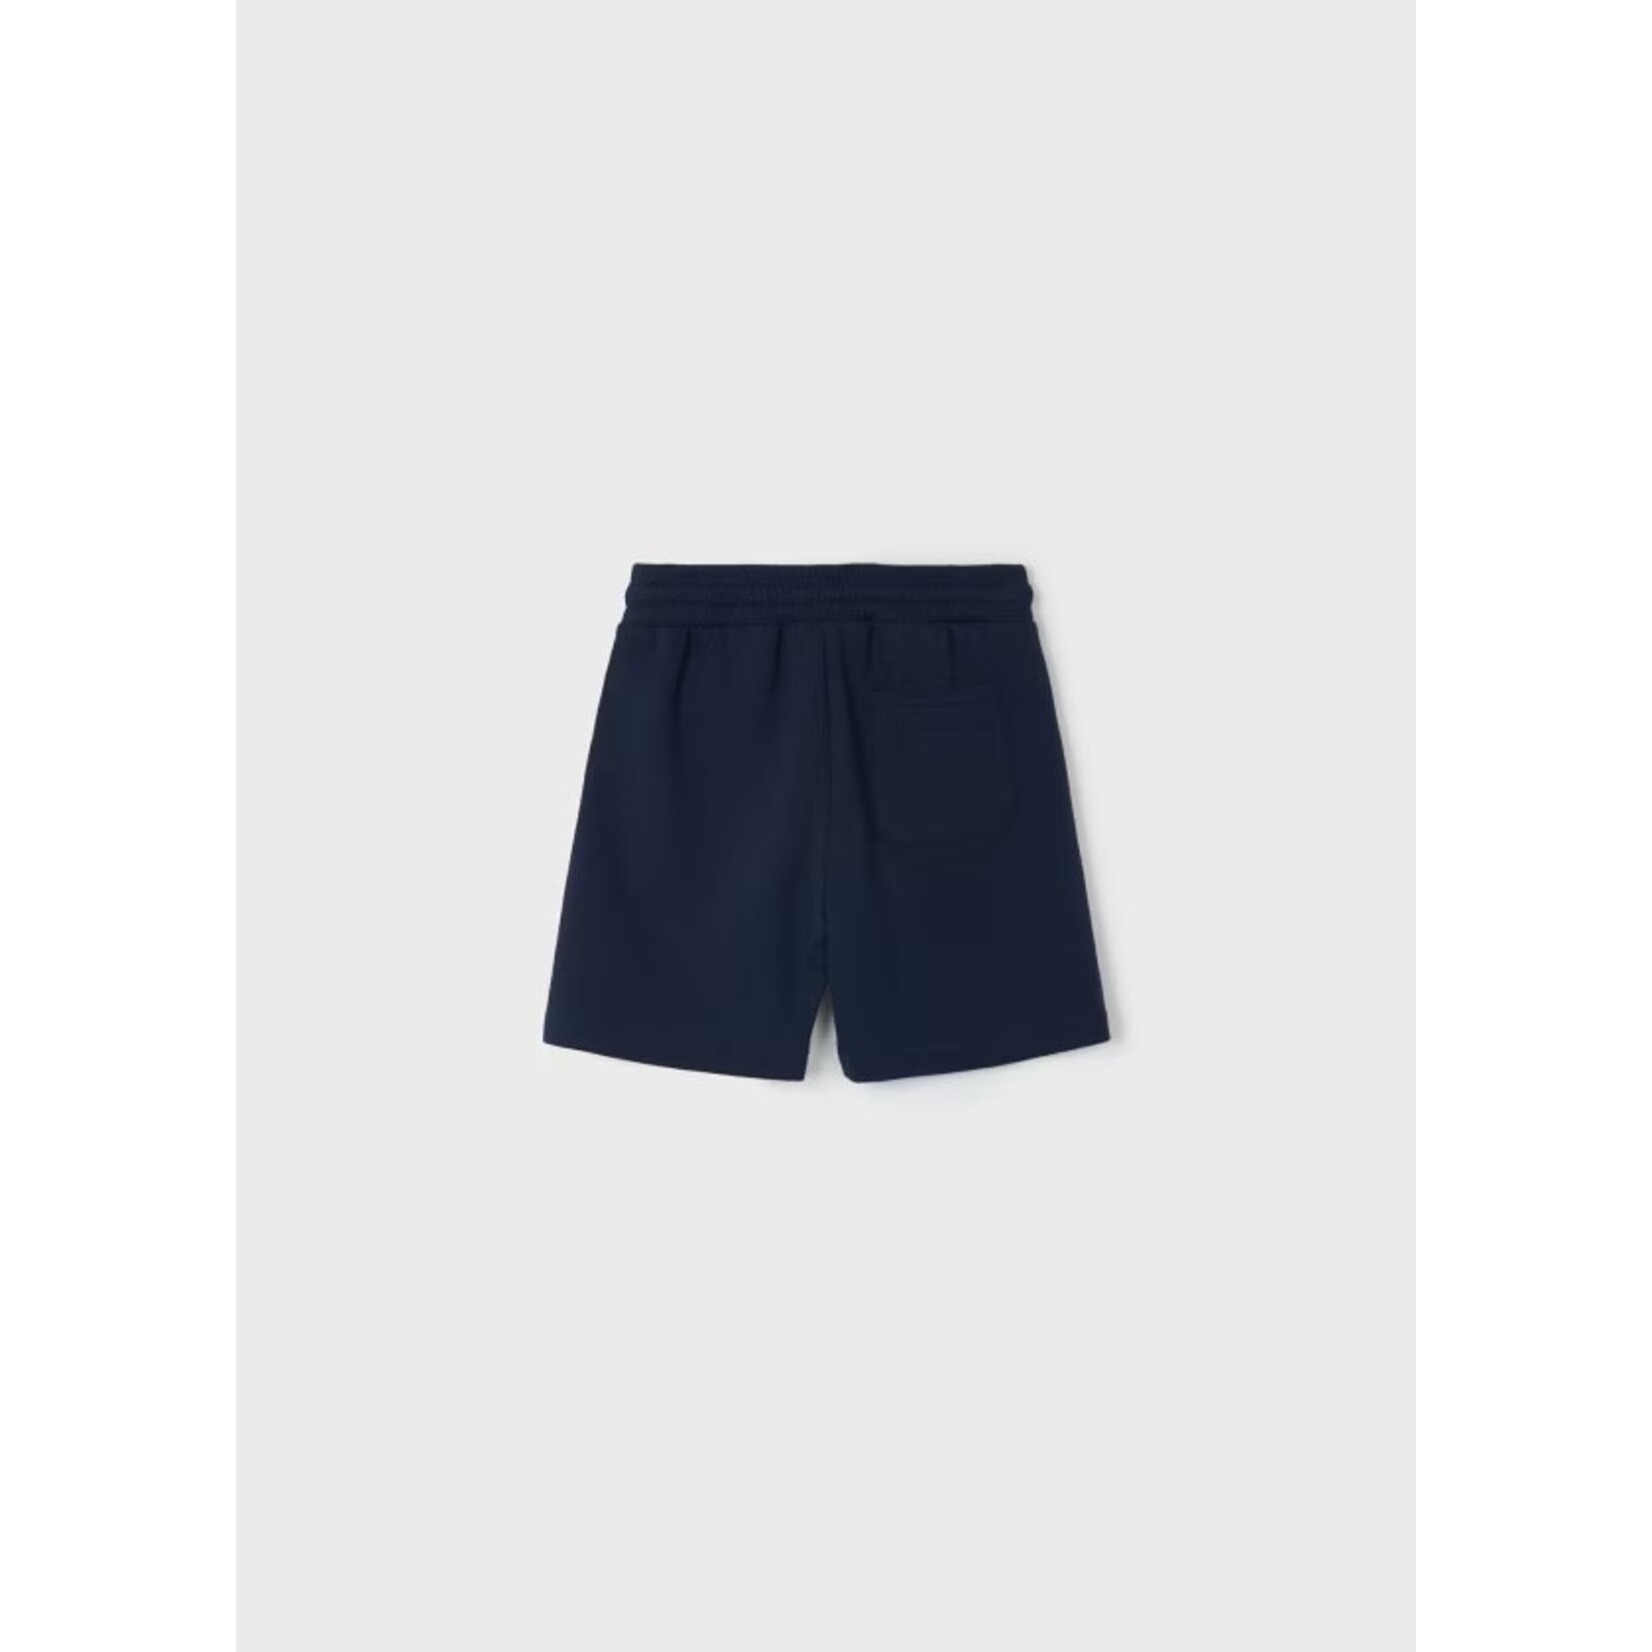 Mayoral MAYORAL - Navy jersey cotton shorts